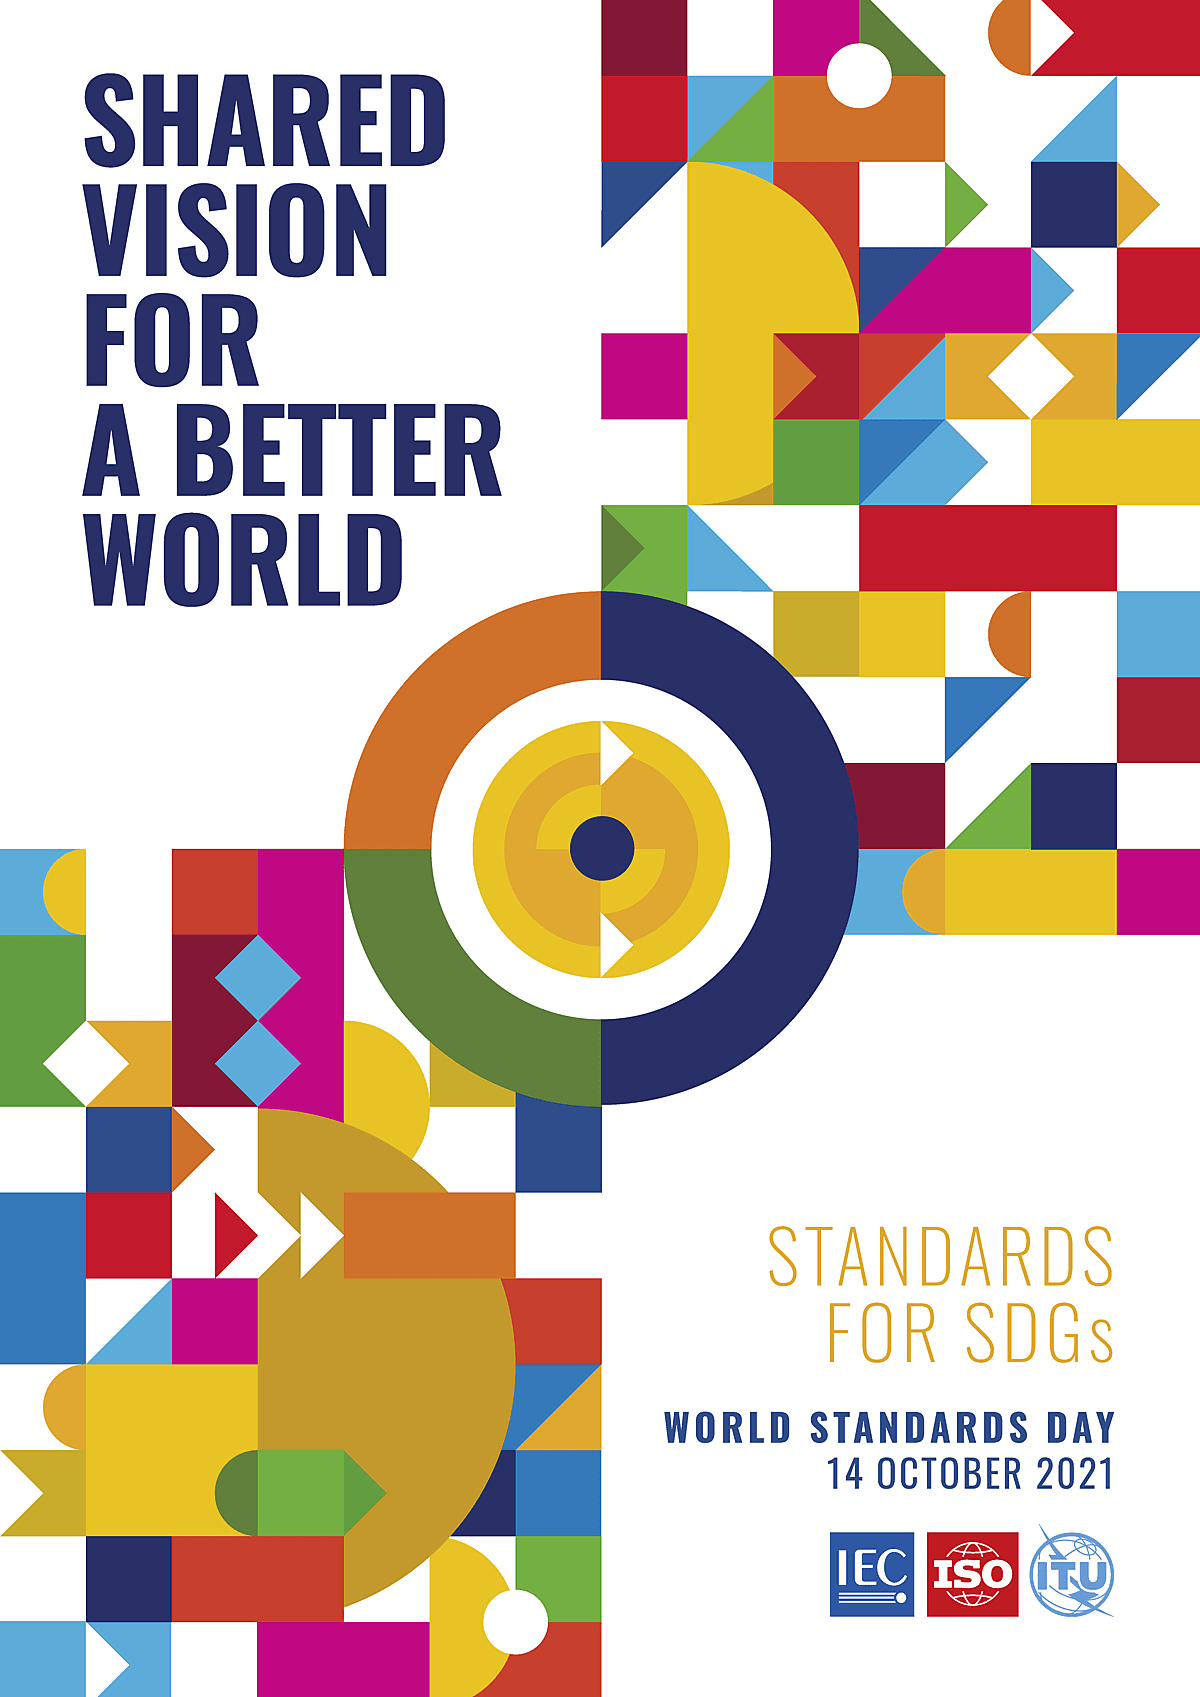 Happy World Standards Day!